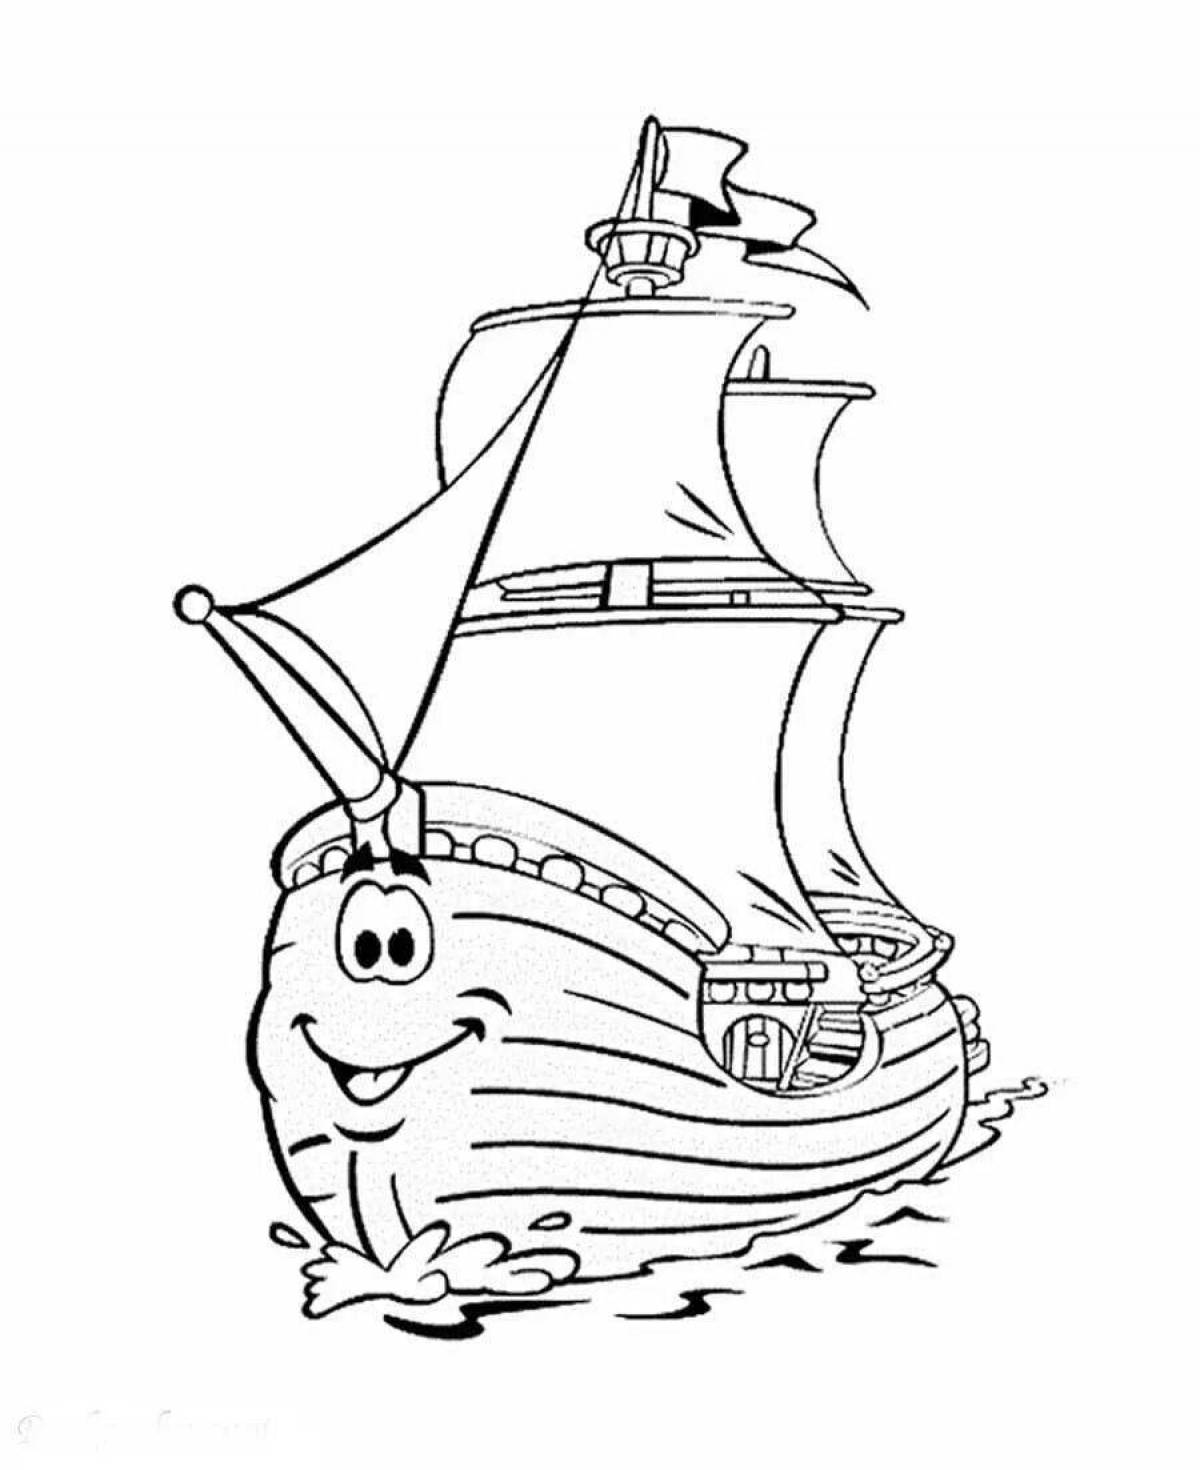 A fun ship coloring book for kids